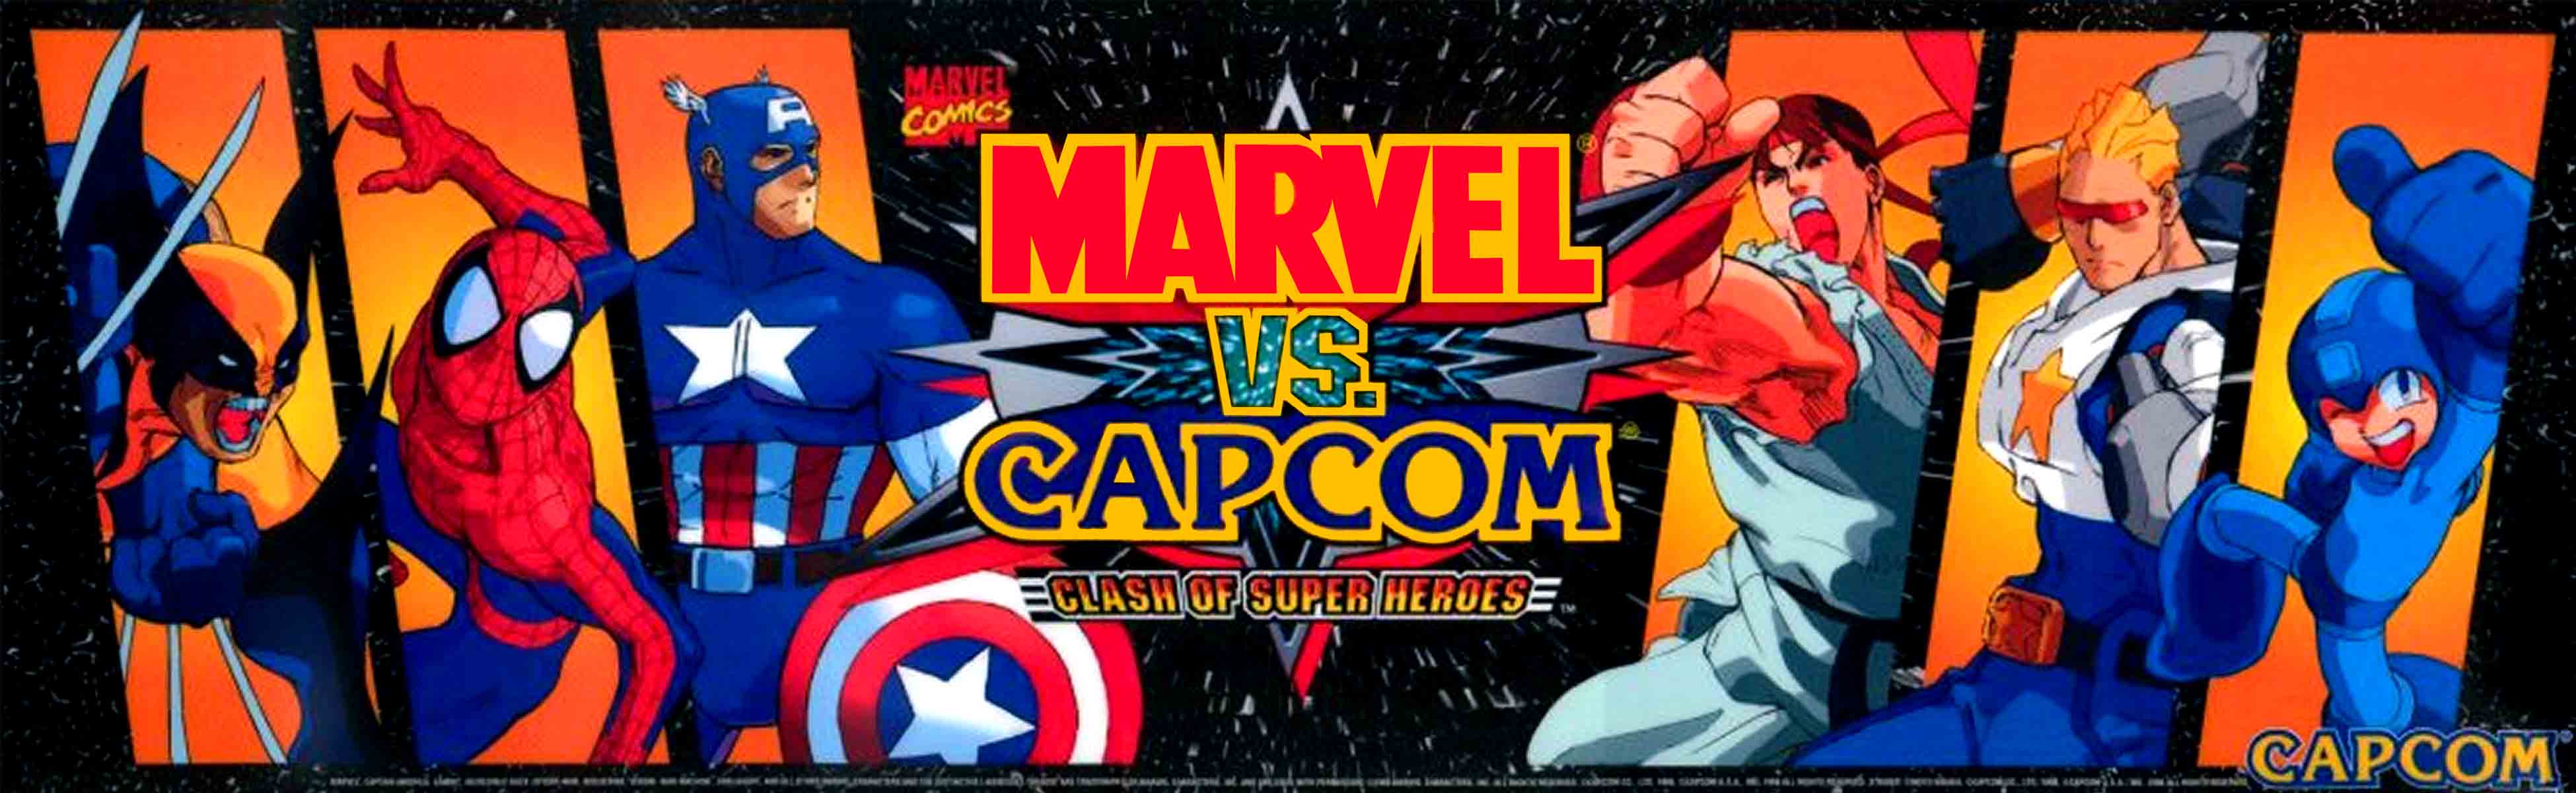 Amazing Marvel Vs. Capcom Pictures & Backgrounds